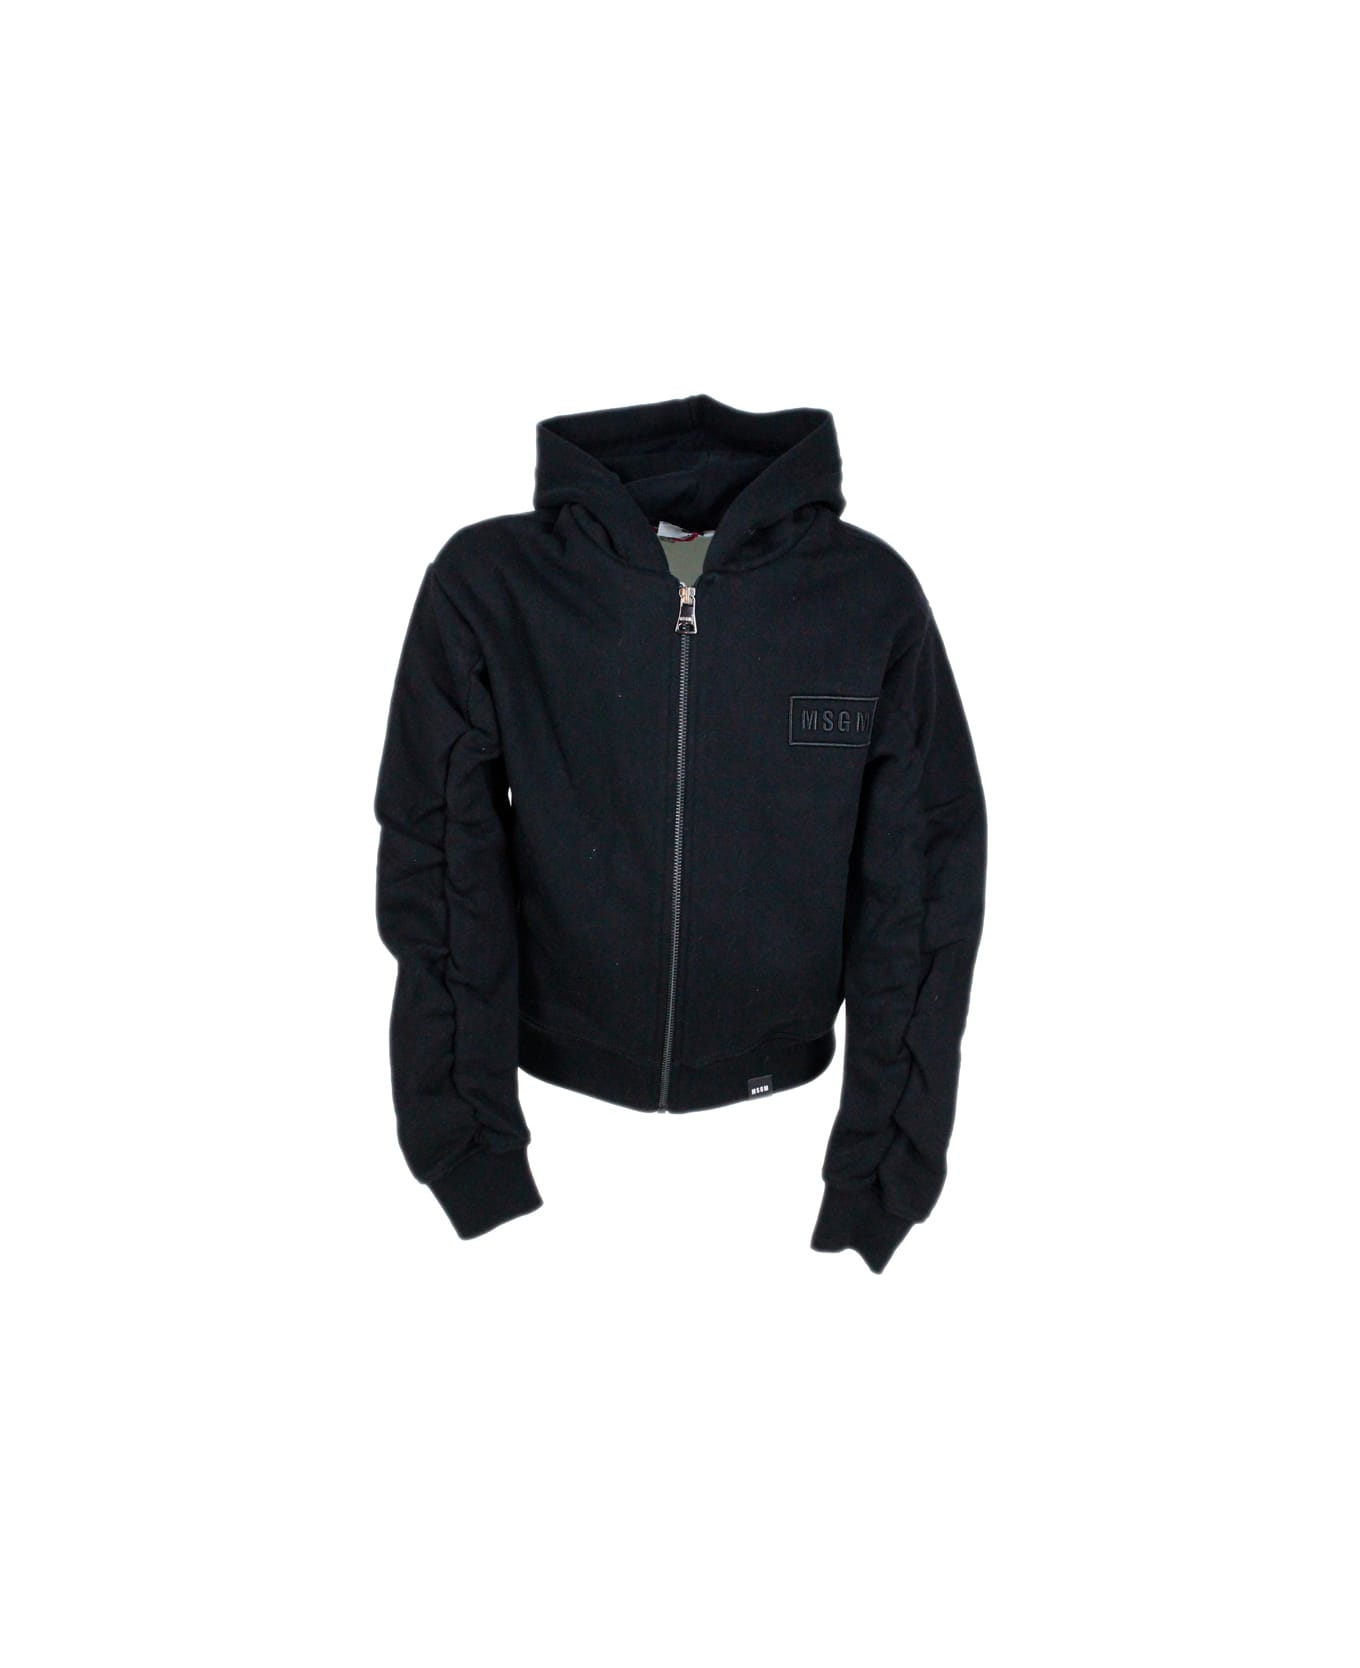 MSGM Cotton Sweatshirt With Hood With Side Pockets, Zip Closure And Writing - Black ニットウェア＆スウェットシャツ